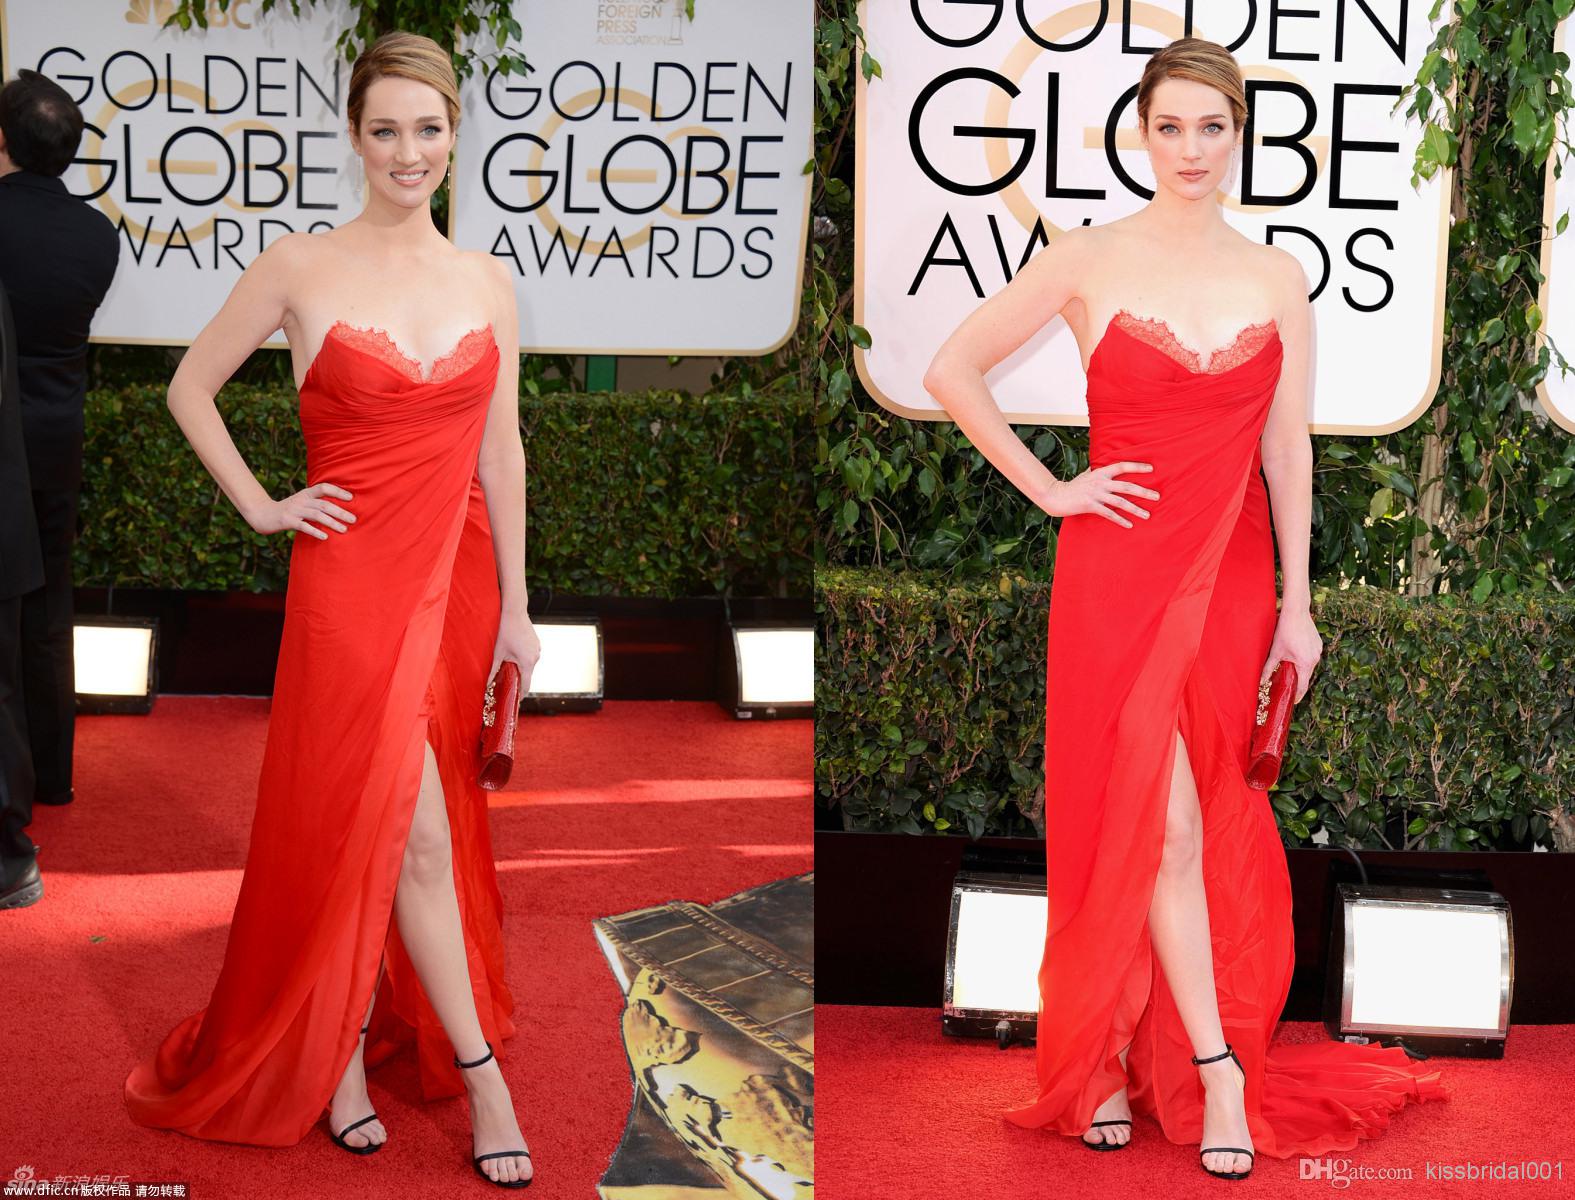 Golden globe red carpet sexy dresses